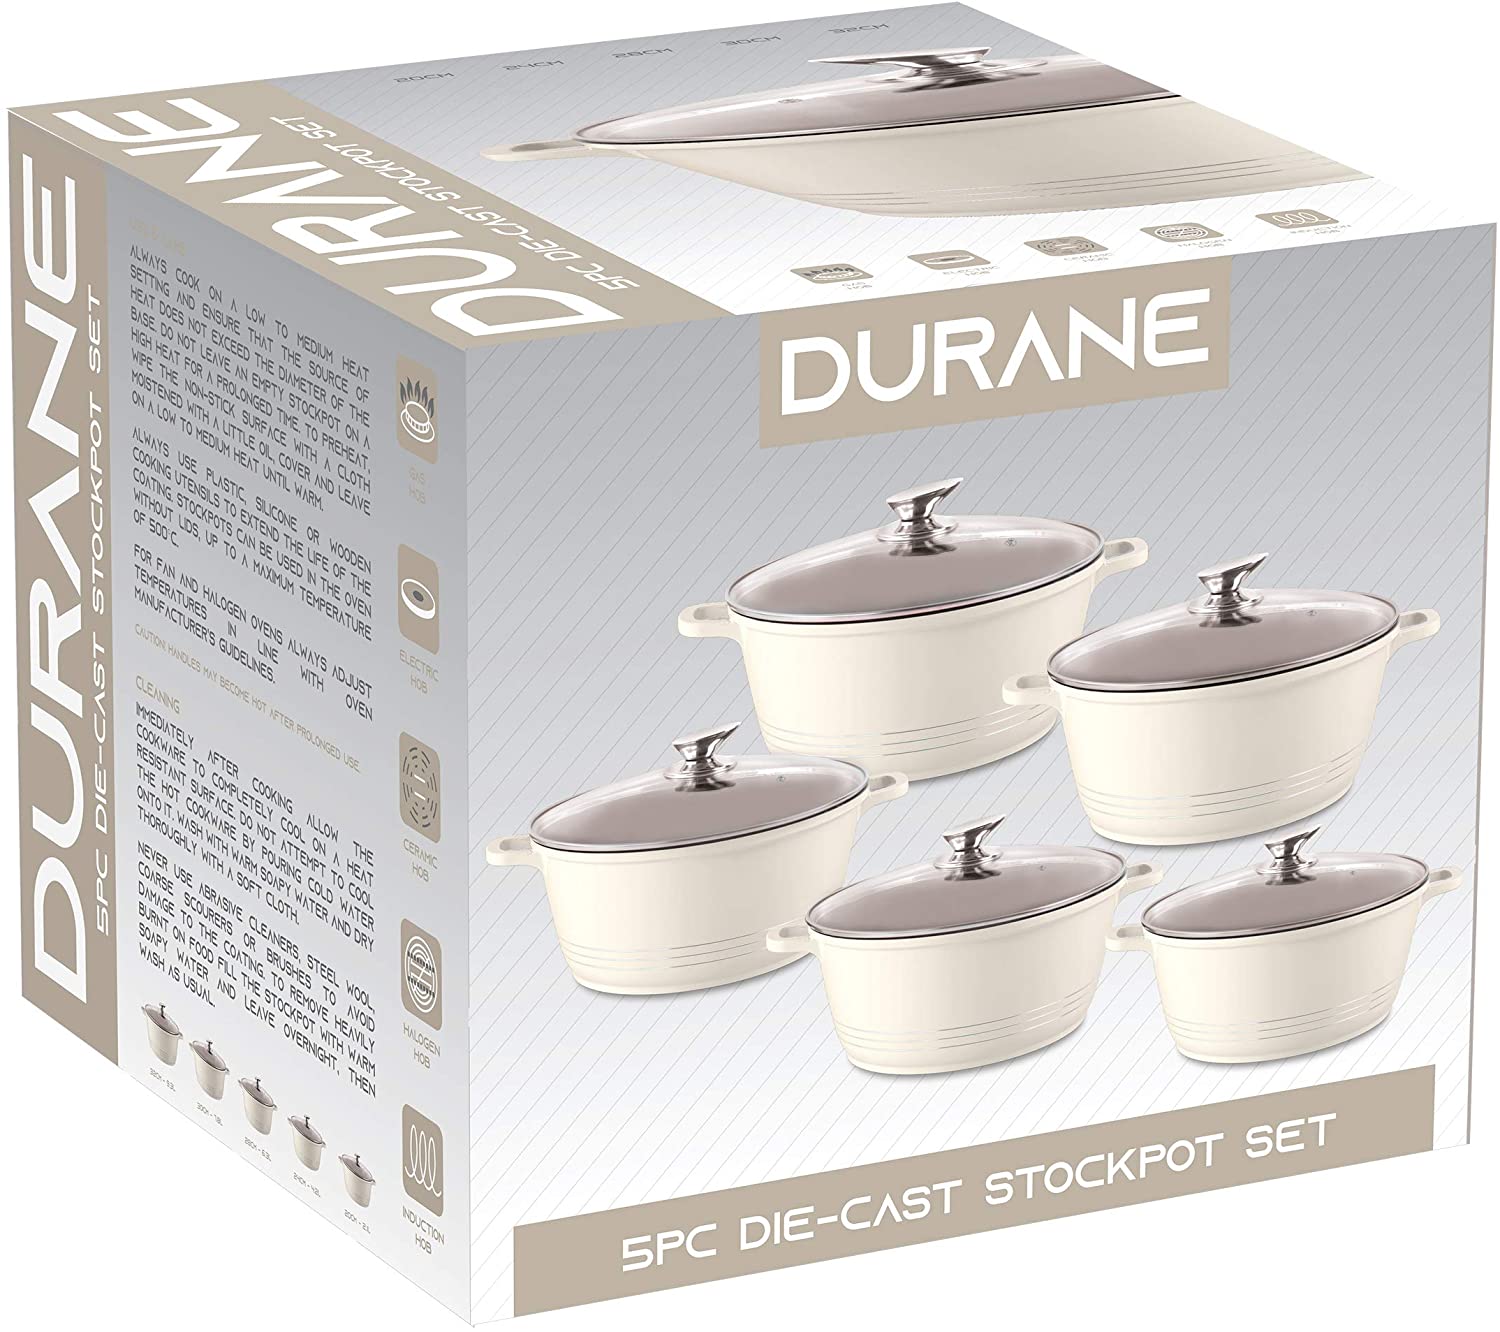 Die Cast Stockpots With Induction - DURANE - Cream - 5 Pcs Set